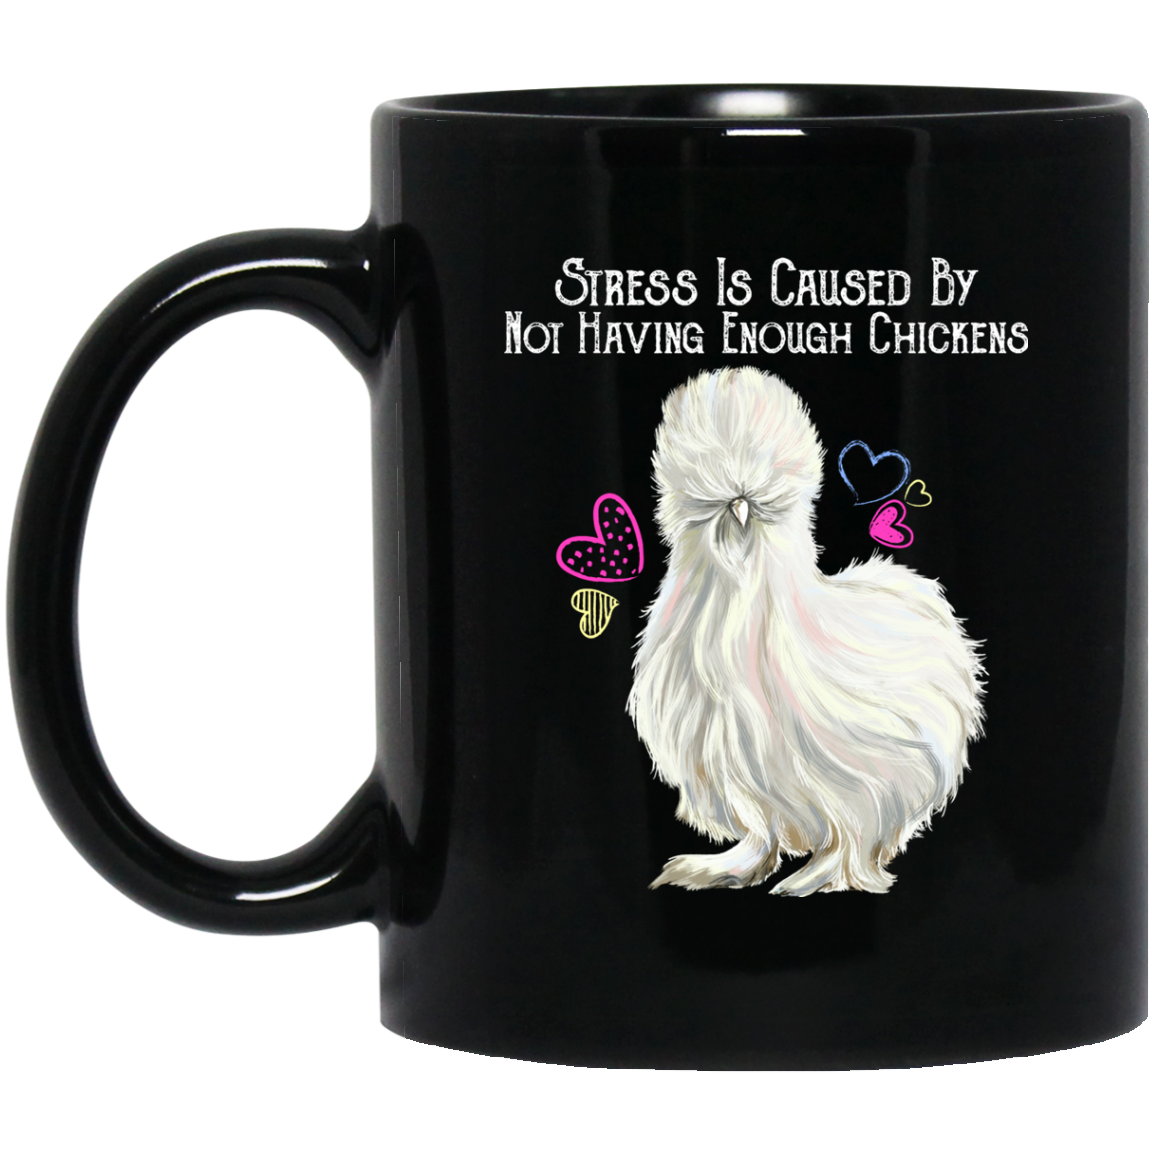 Crazy Chicken Lady Gifts, Chicken Lady Coffee Mug - GoneBold.gift